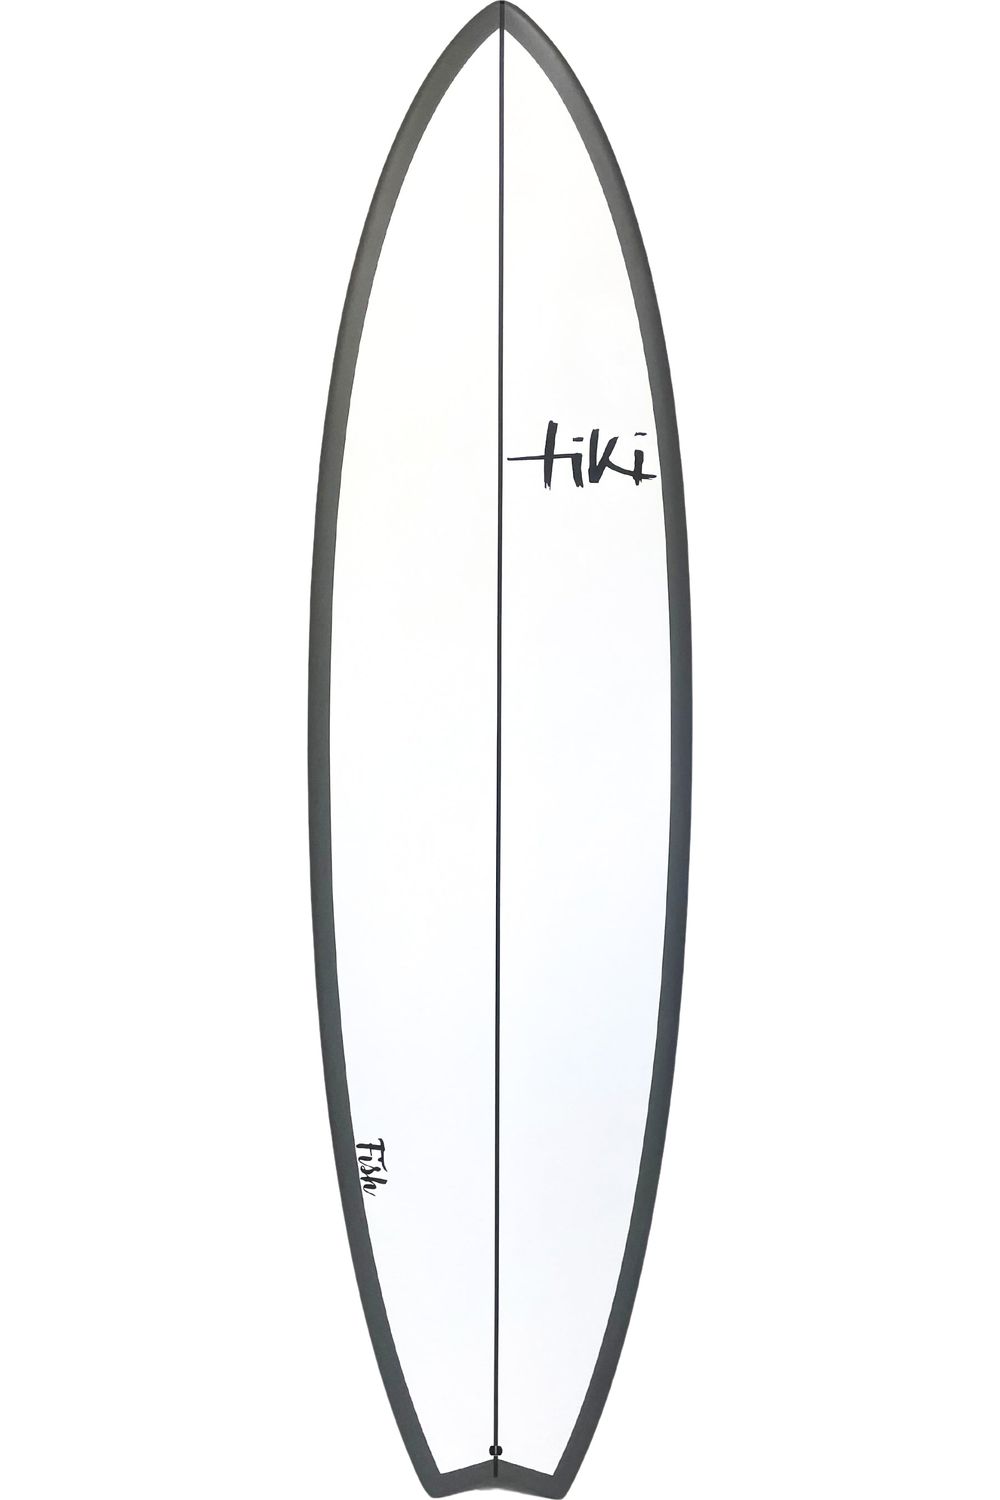 Tiki Evolution Fish Surfboard - Grey